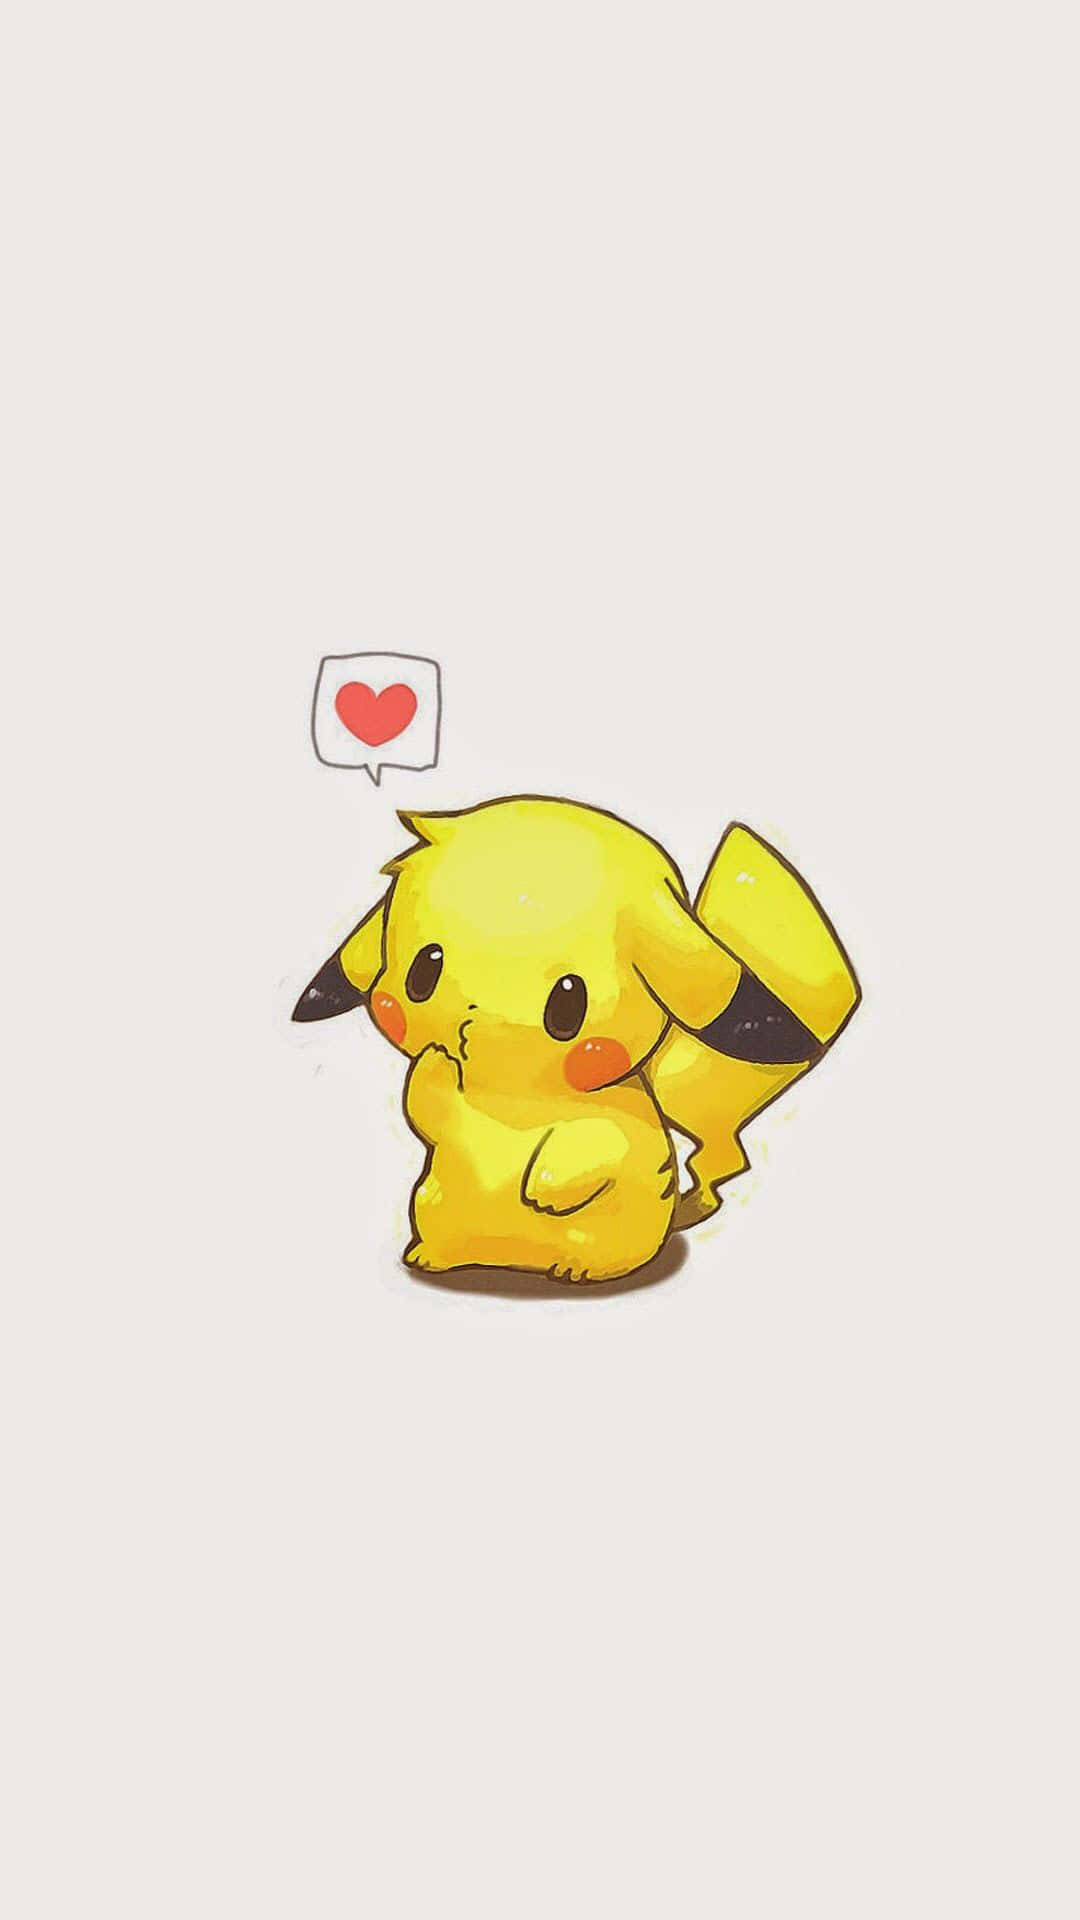 Cute Baby Pikachu 1080 X 1920 Wallpaper